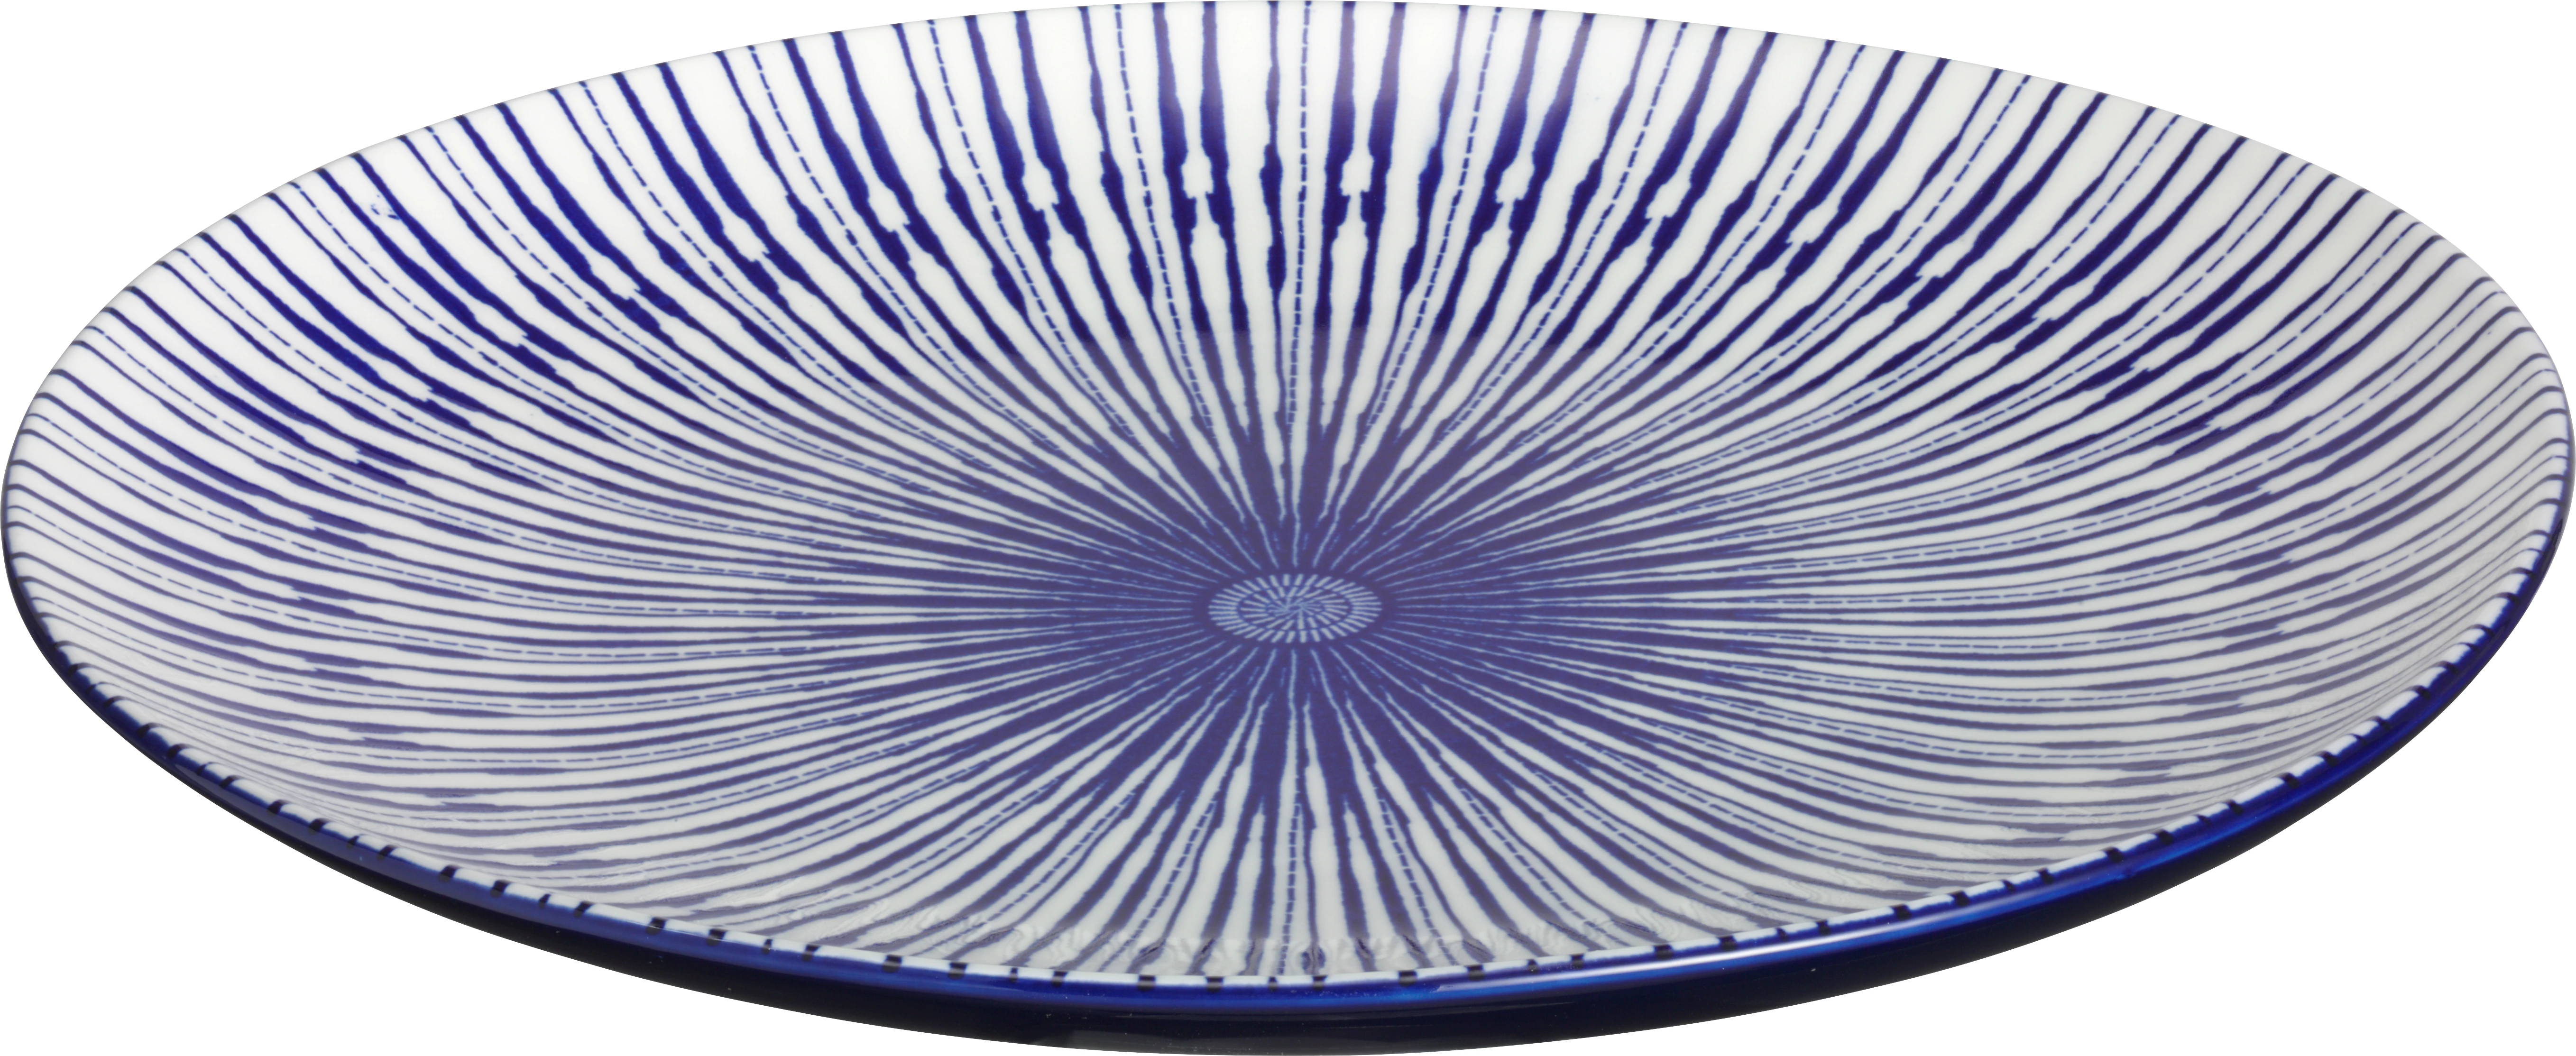 Porto flad tallerken uden fane, blå, ø26 cm